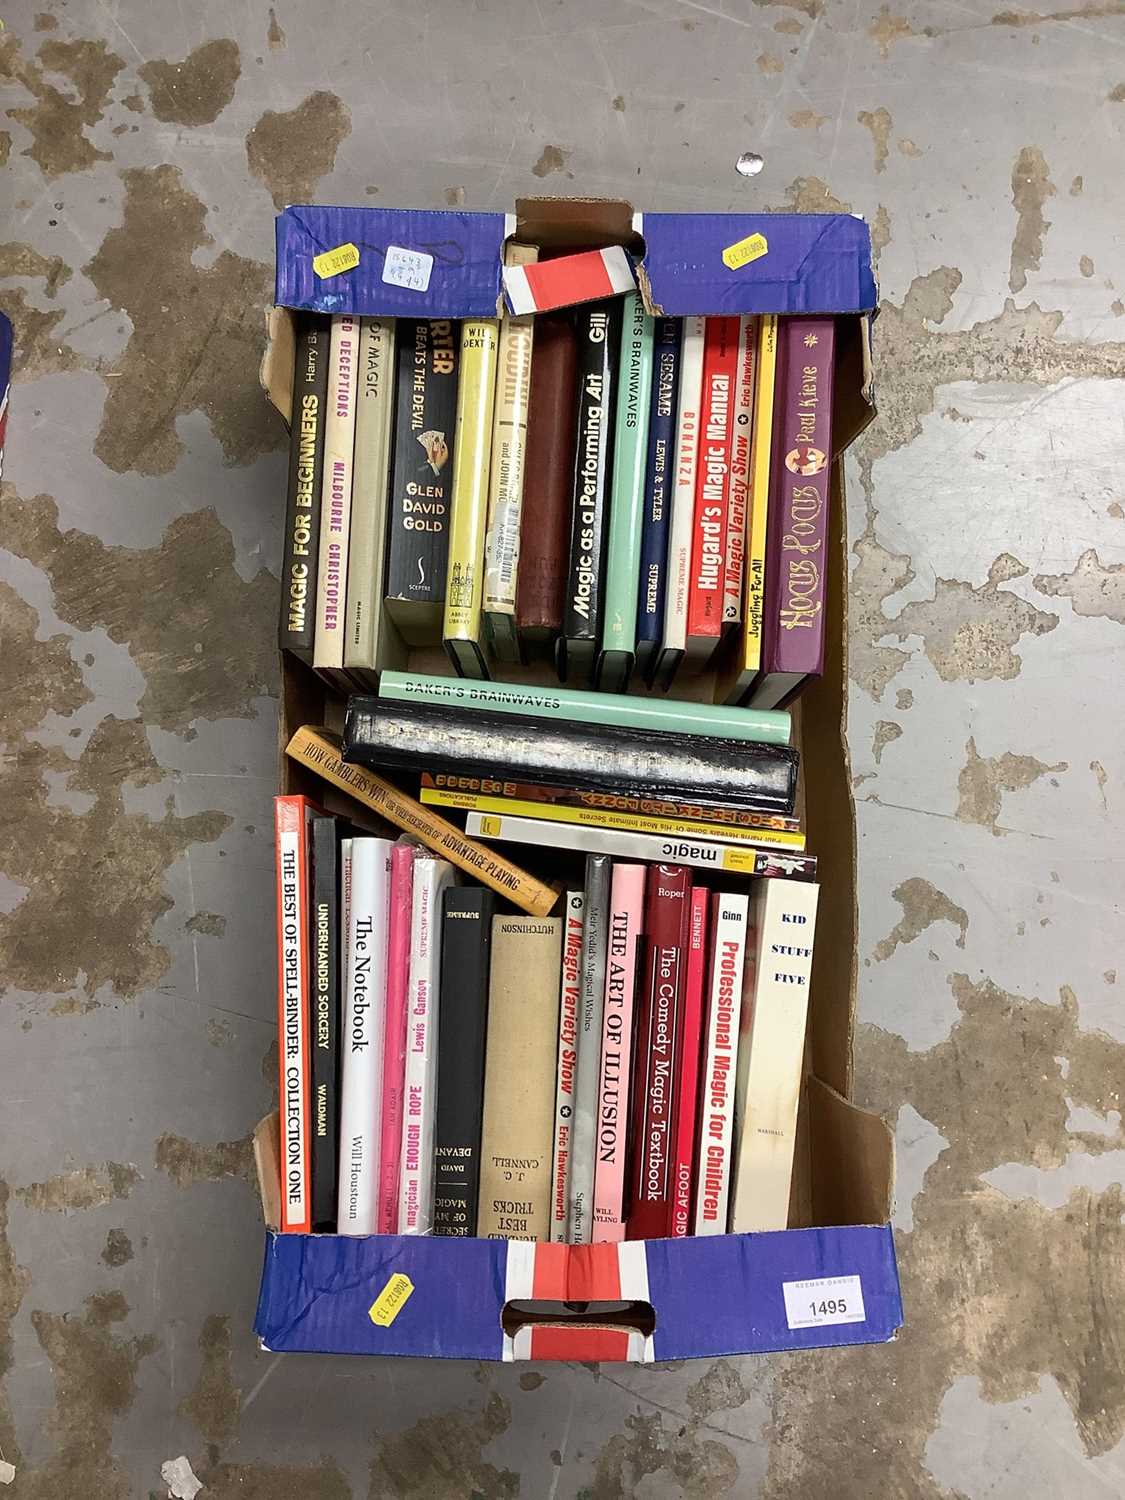 Lot 1495 - One box of various Magic Books